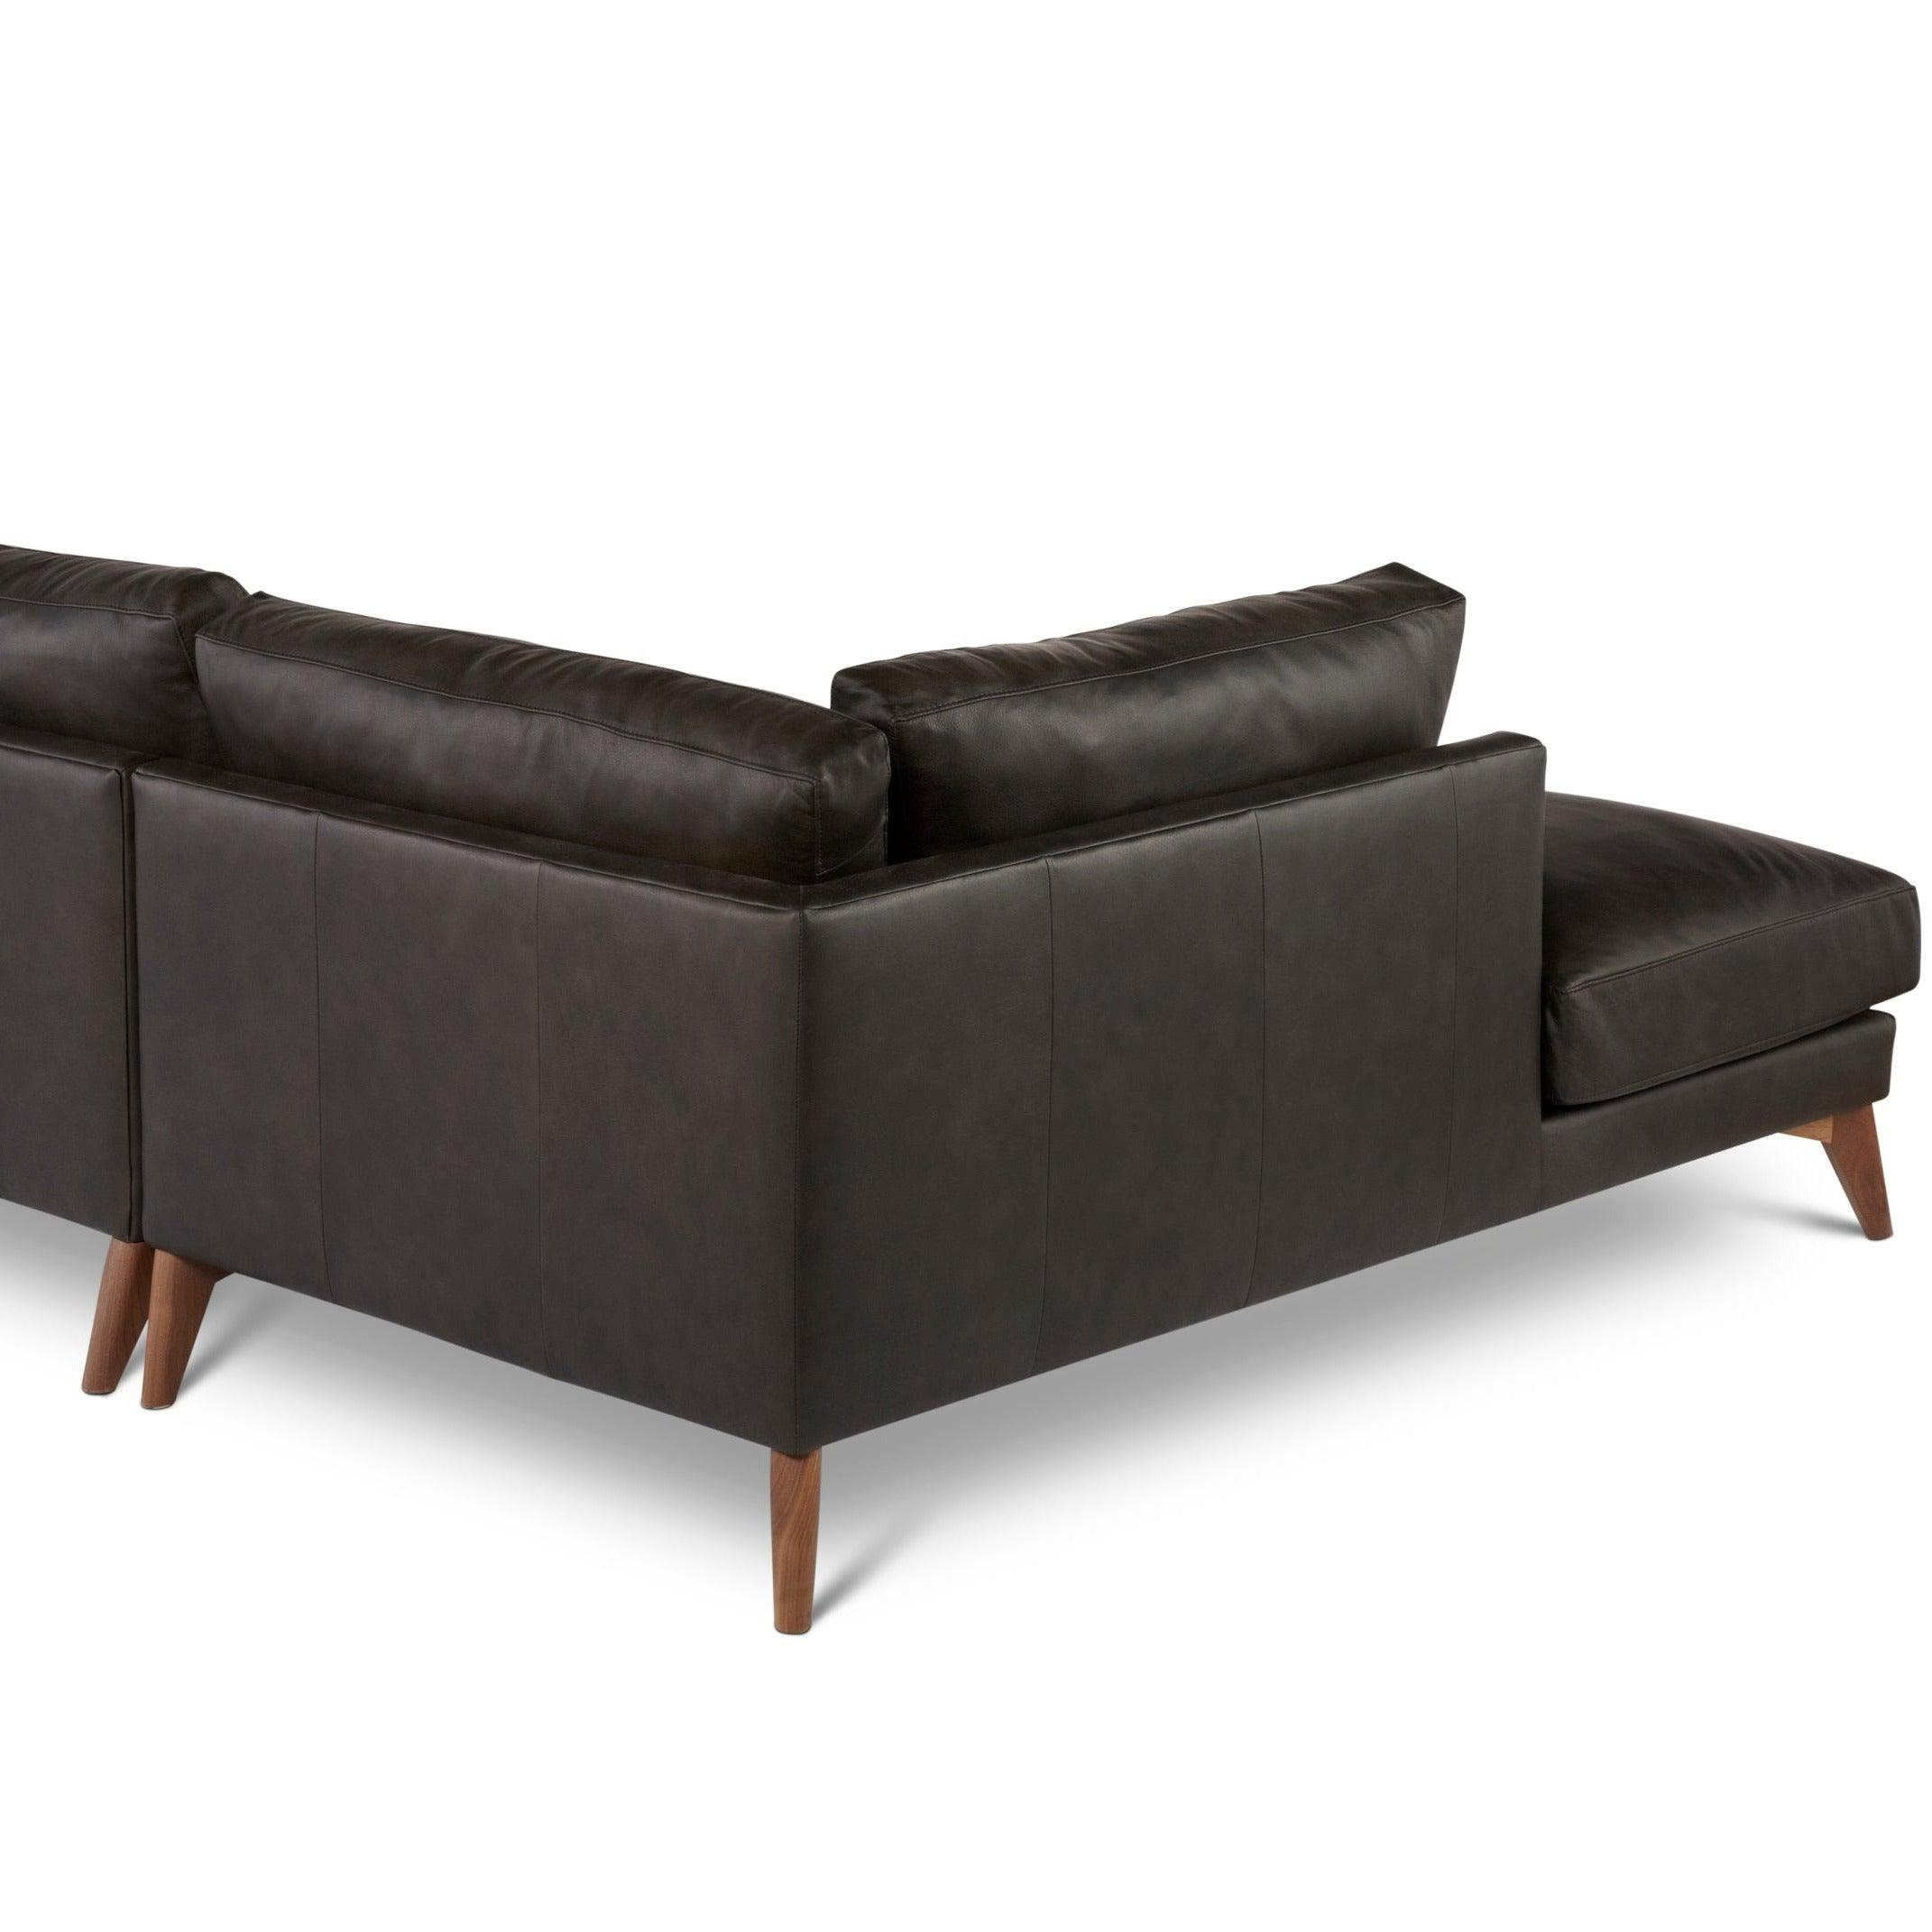 Burbank Small Leather Left Facing Sectional Sofa - Uptown Sebastian